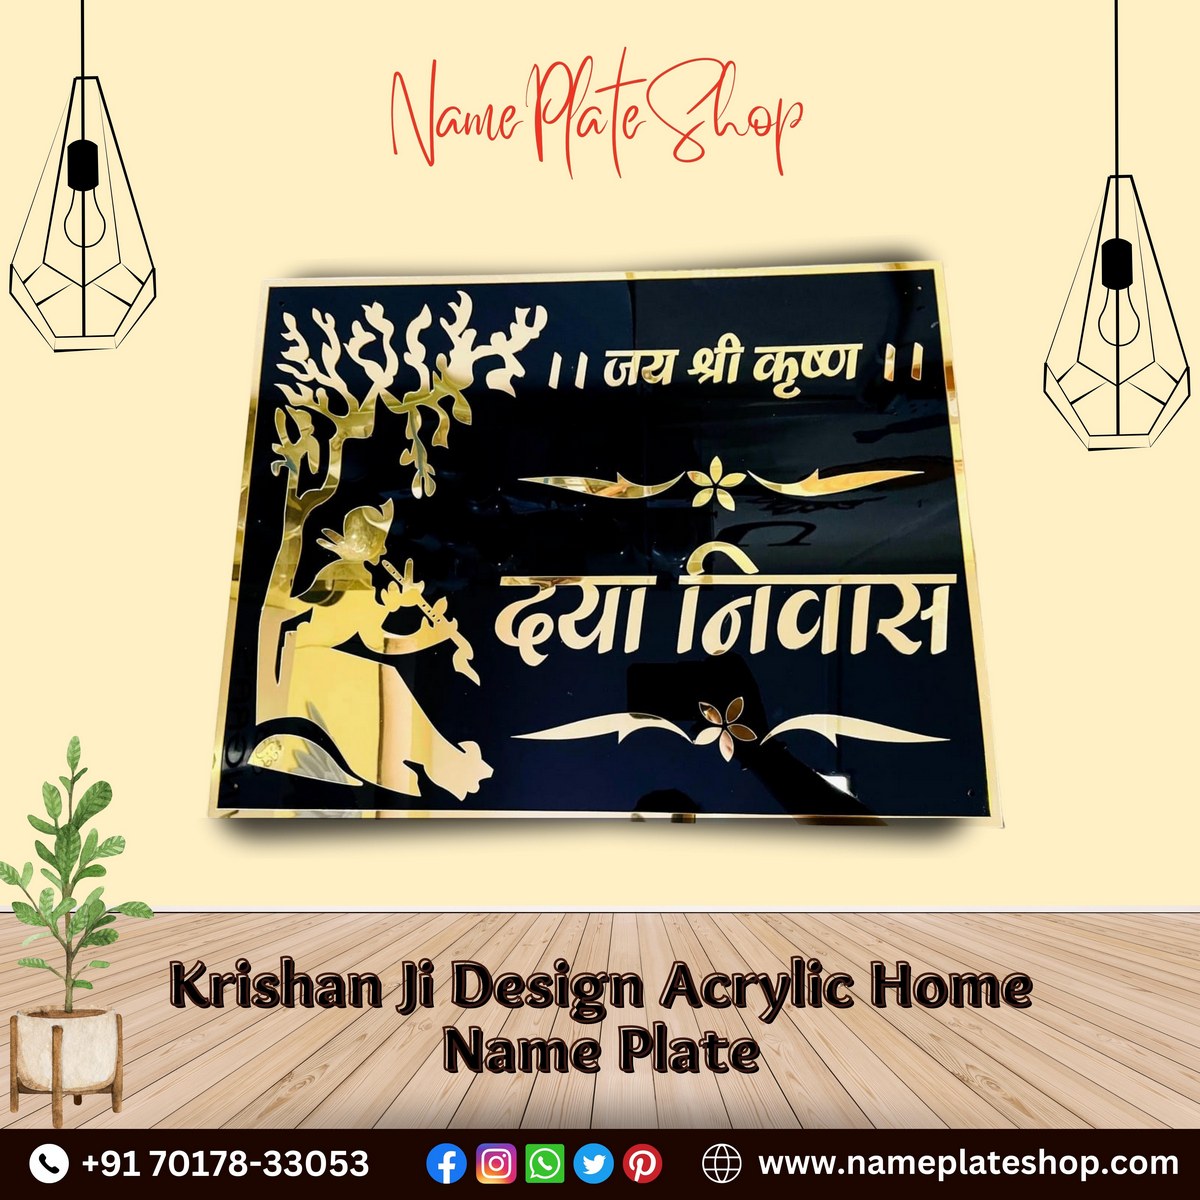 Krishan Ji Design Acrylic Home Nameplate Beyond Beauty